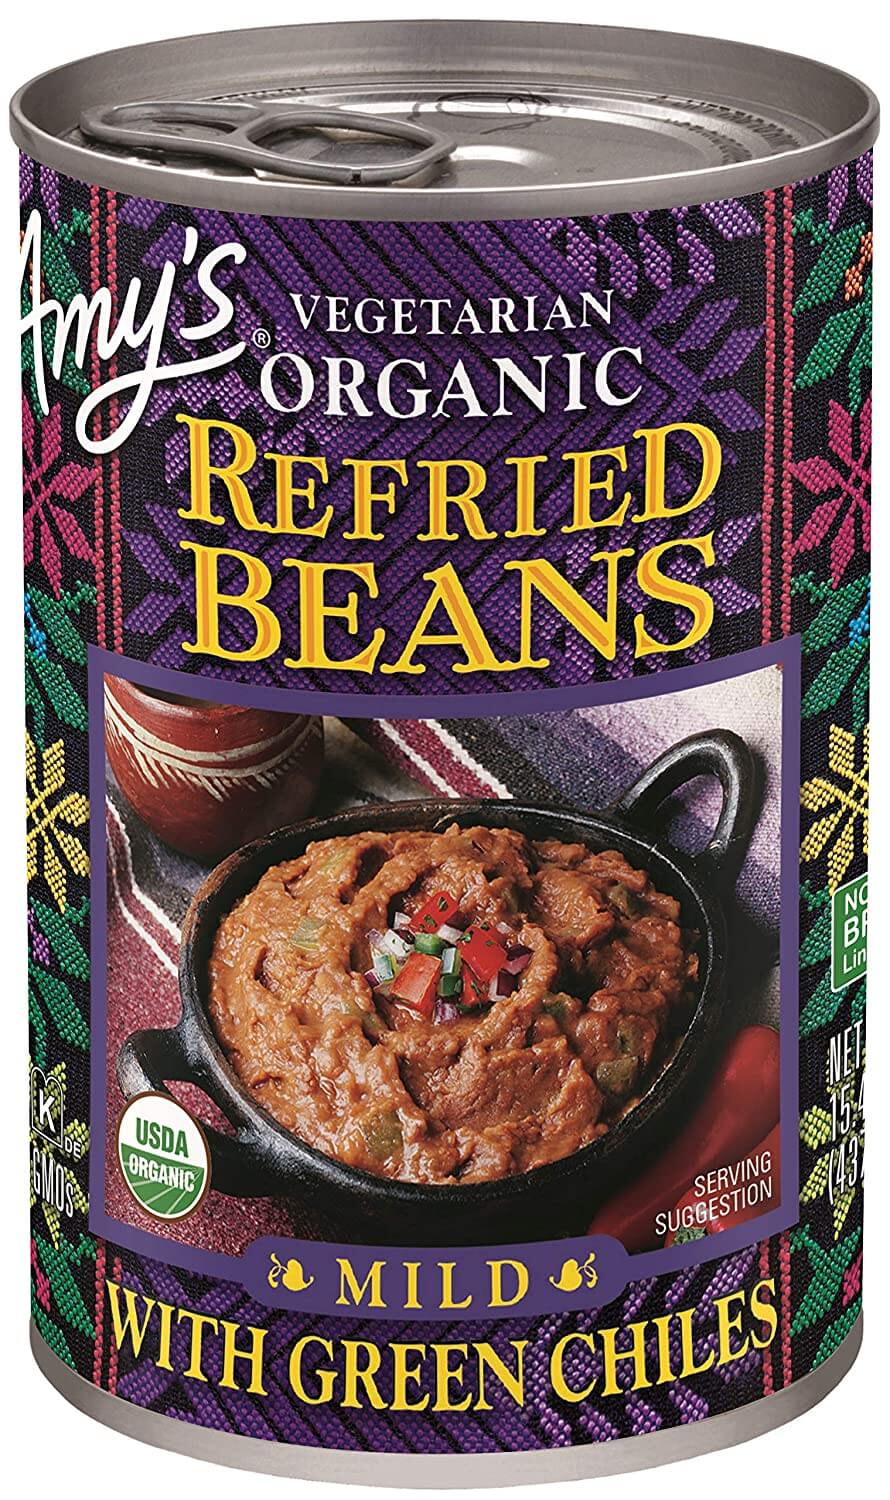 Amy’s Vegetarian Organic Refried Beans